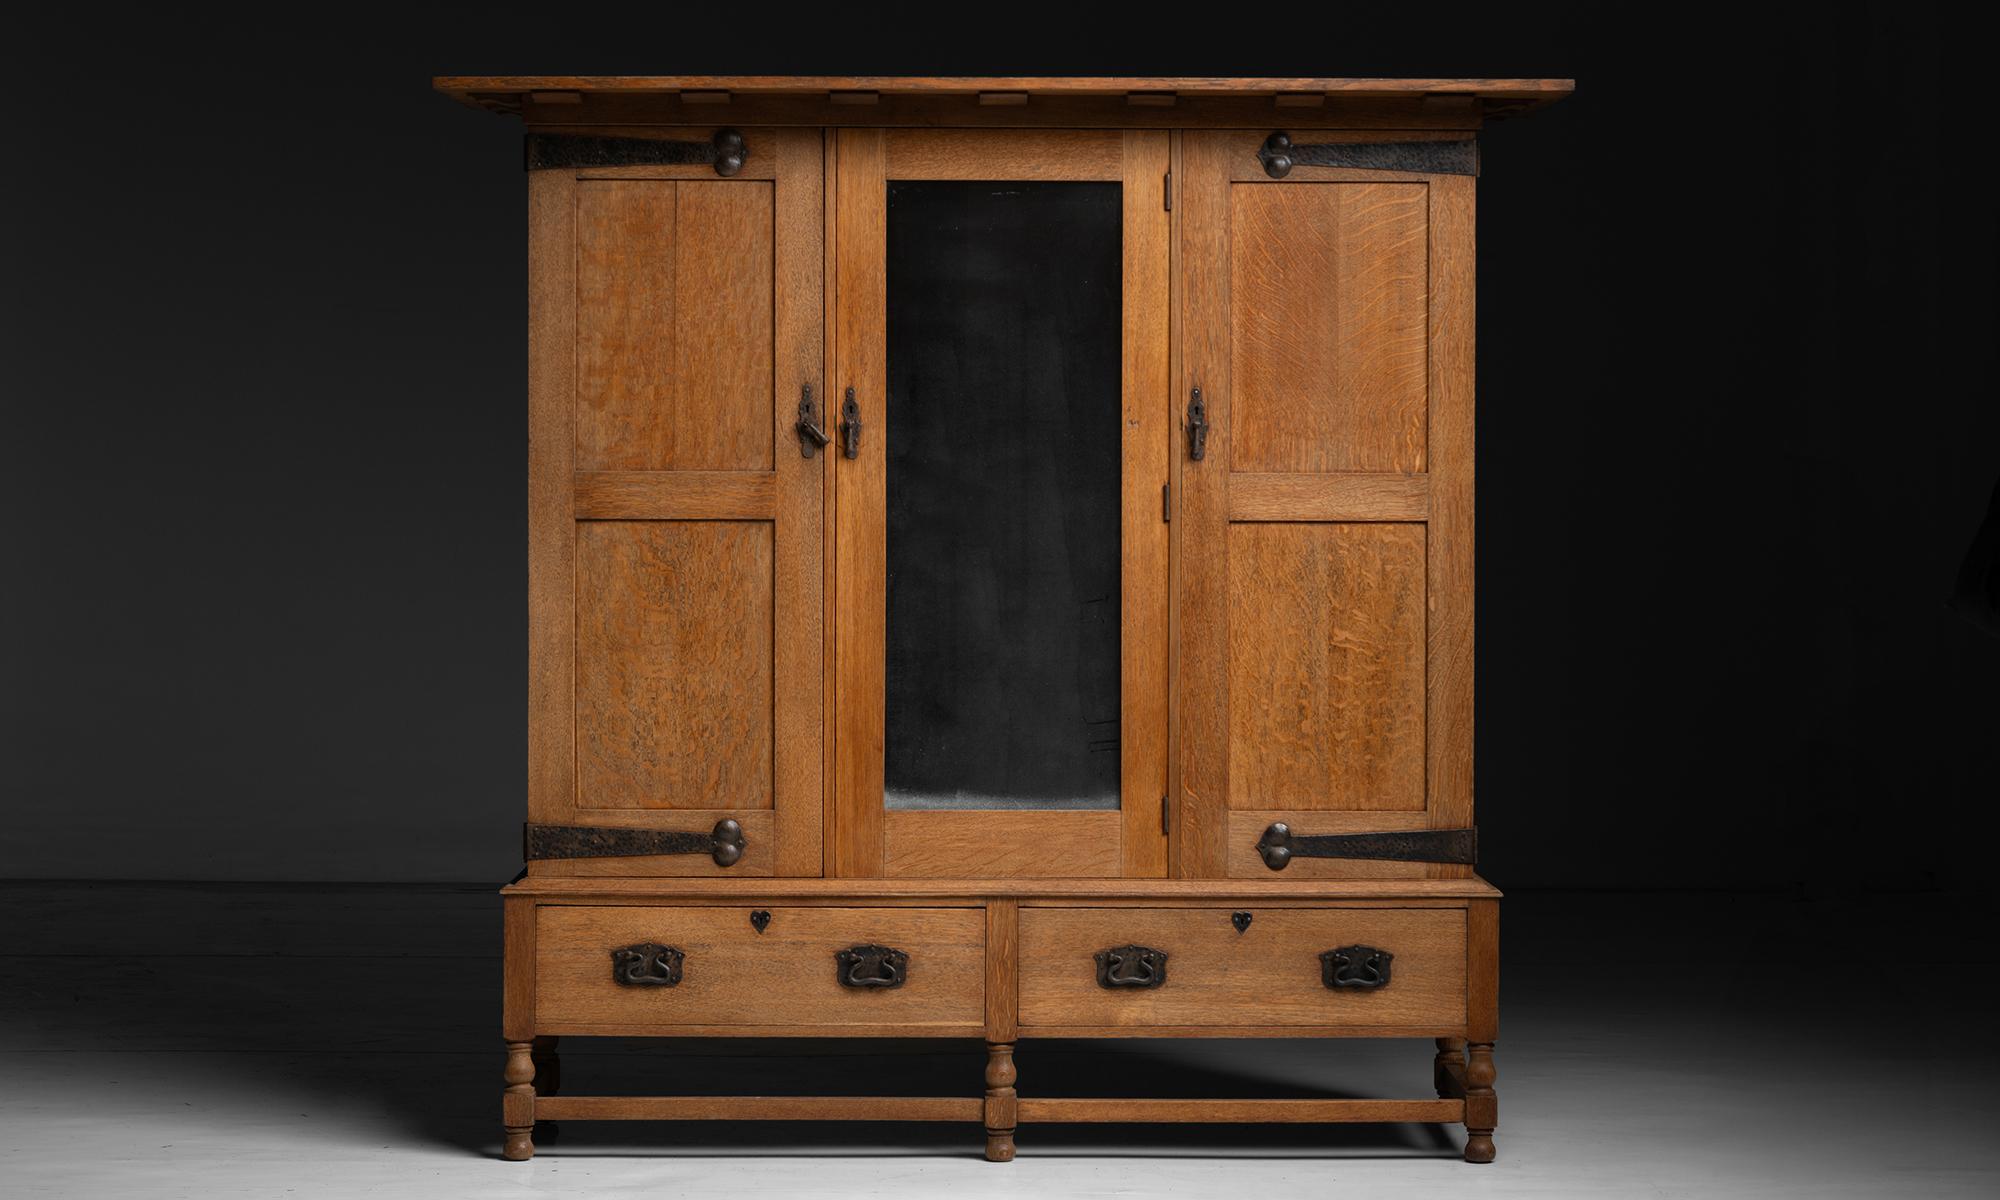 Heals Oak Wardrobe

England circa 1880

Finely made oak wardrobe with original iron hardware from the Guild of Handicraft.

81”w x 26.5”d x 77.75”h